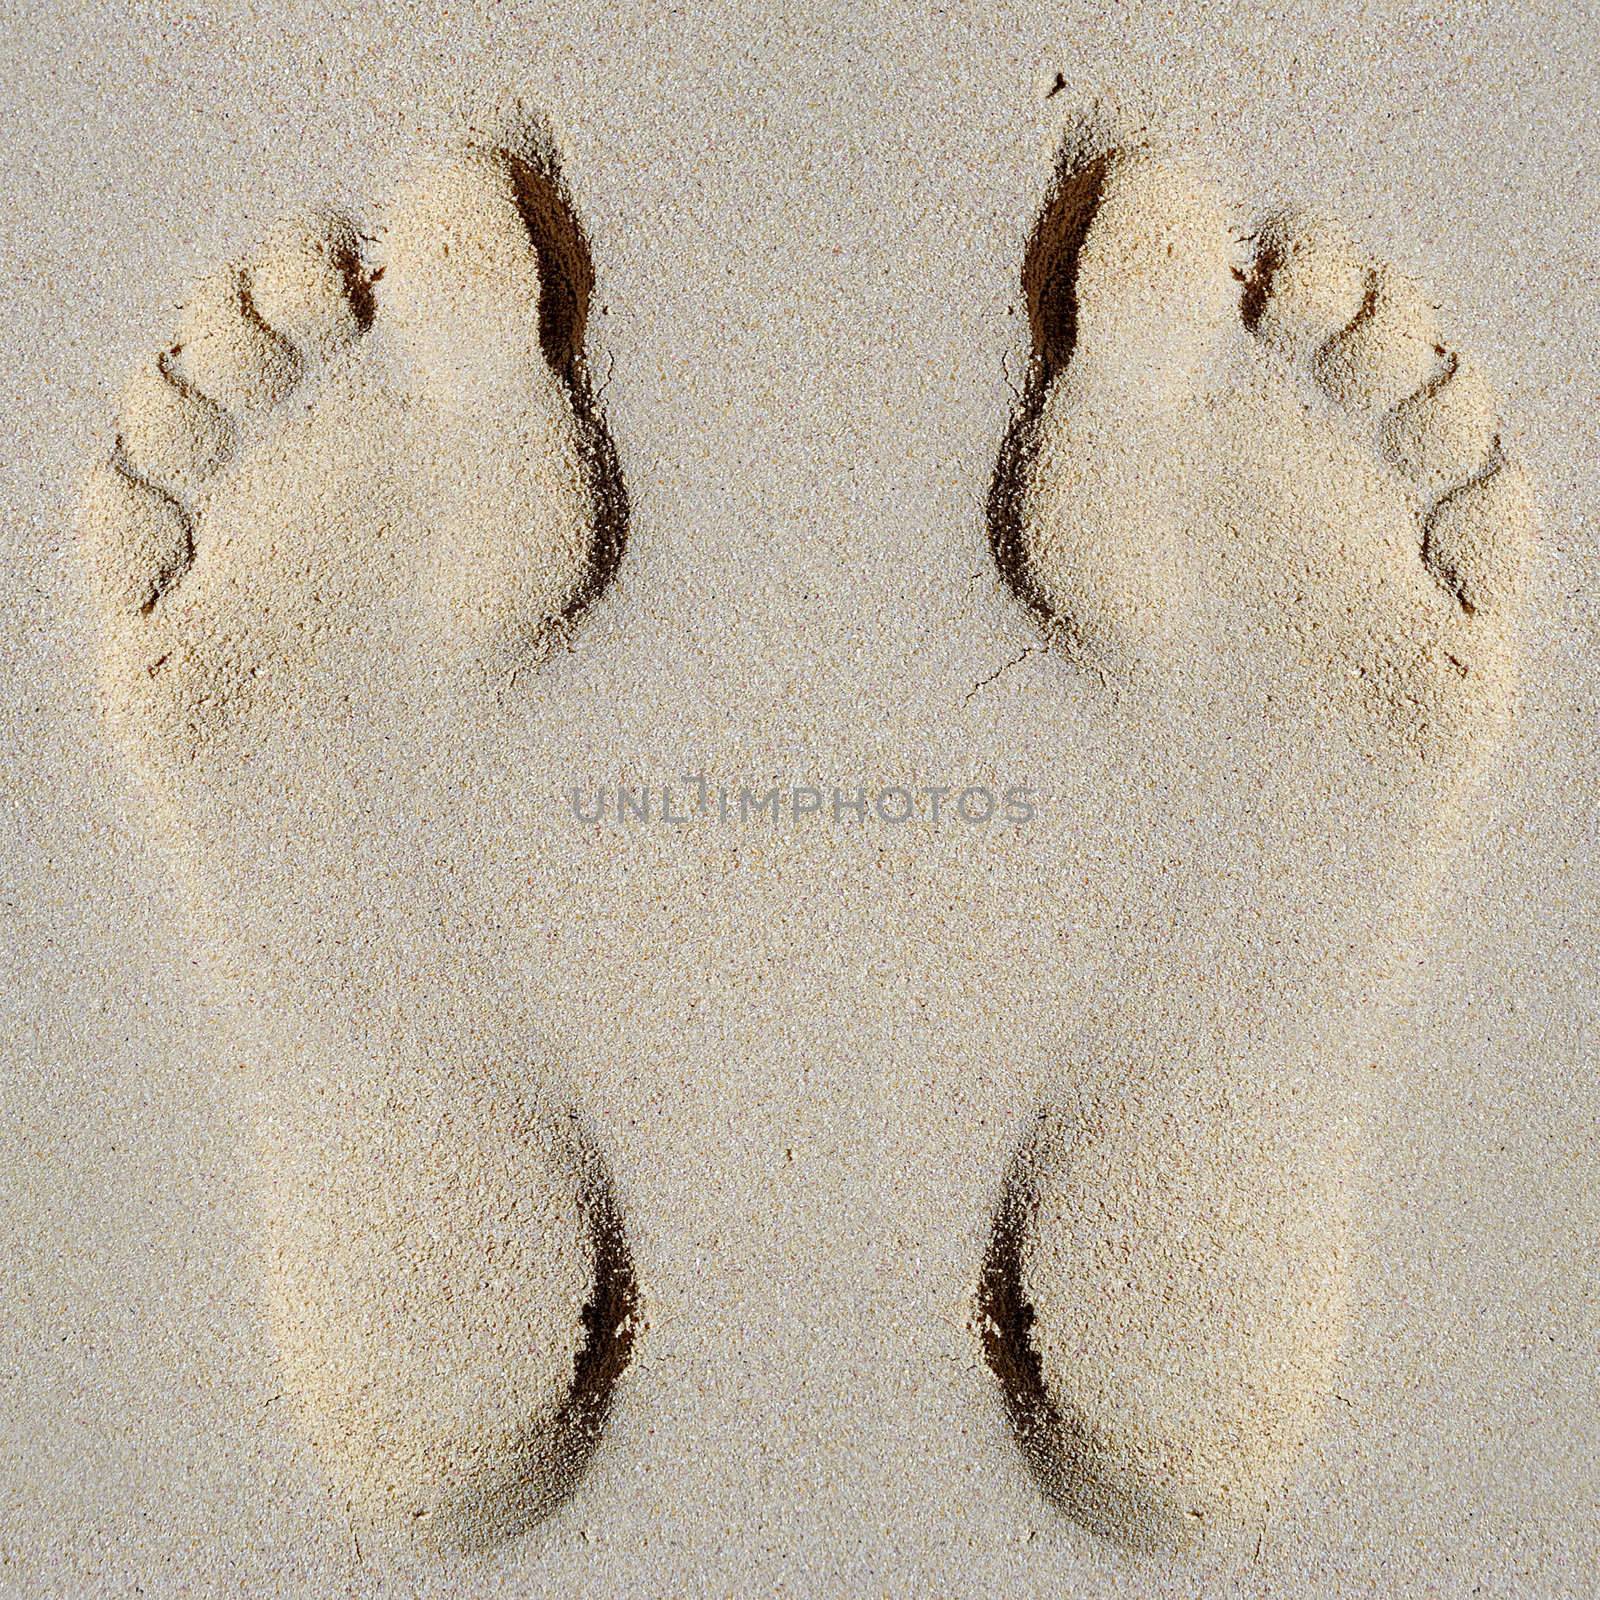 Footprints in sand on beach by cfoto